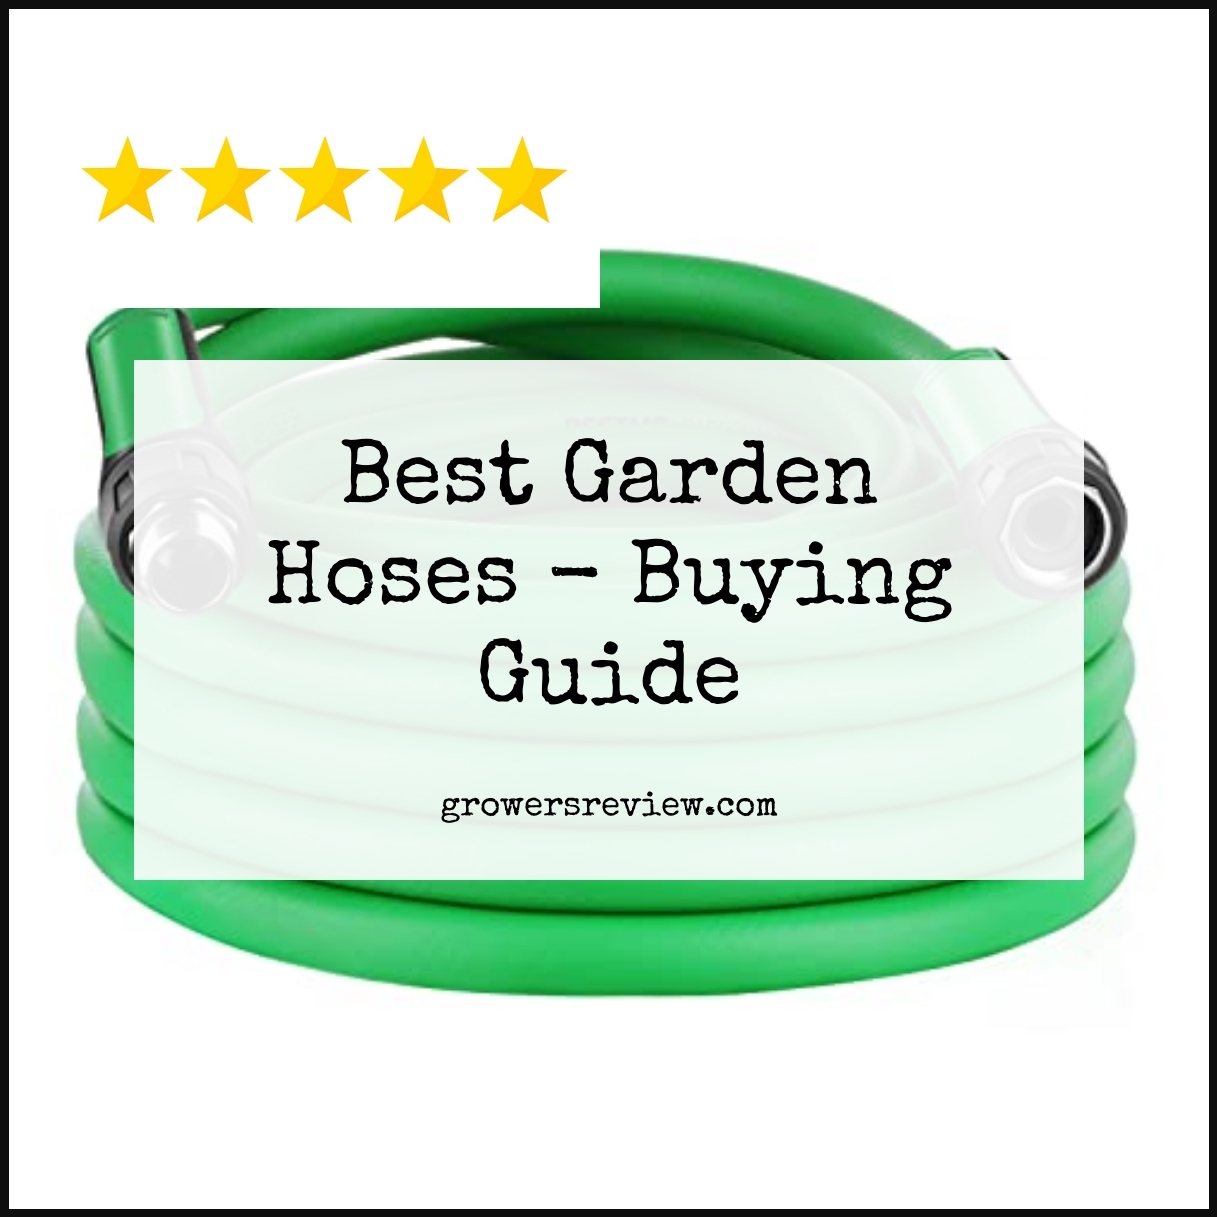 Best Garden Hoses - Buying Guide